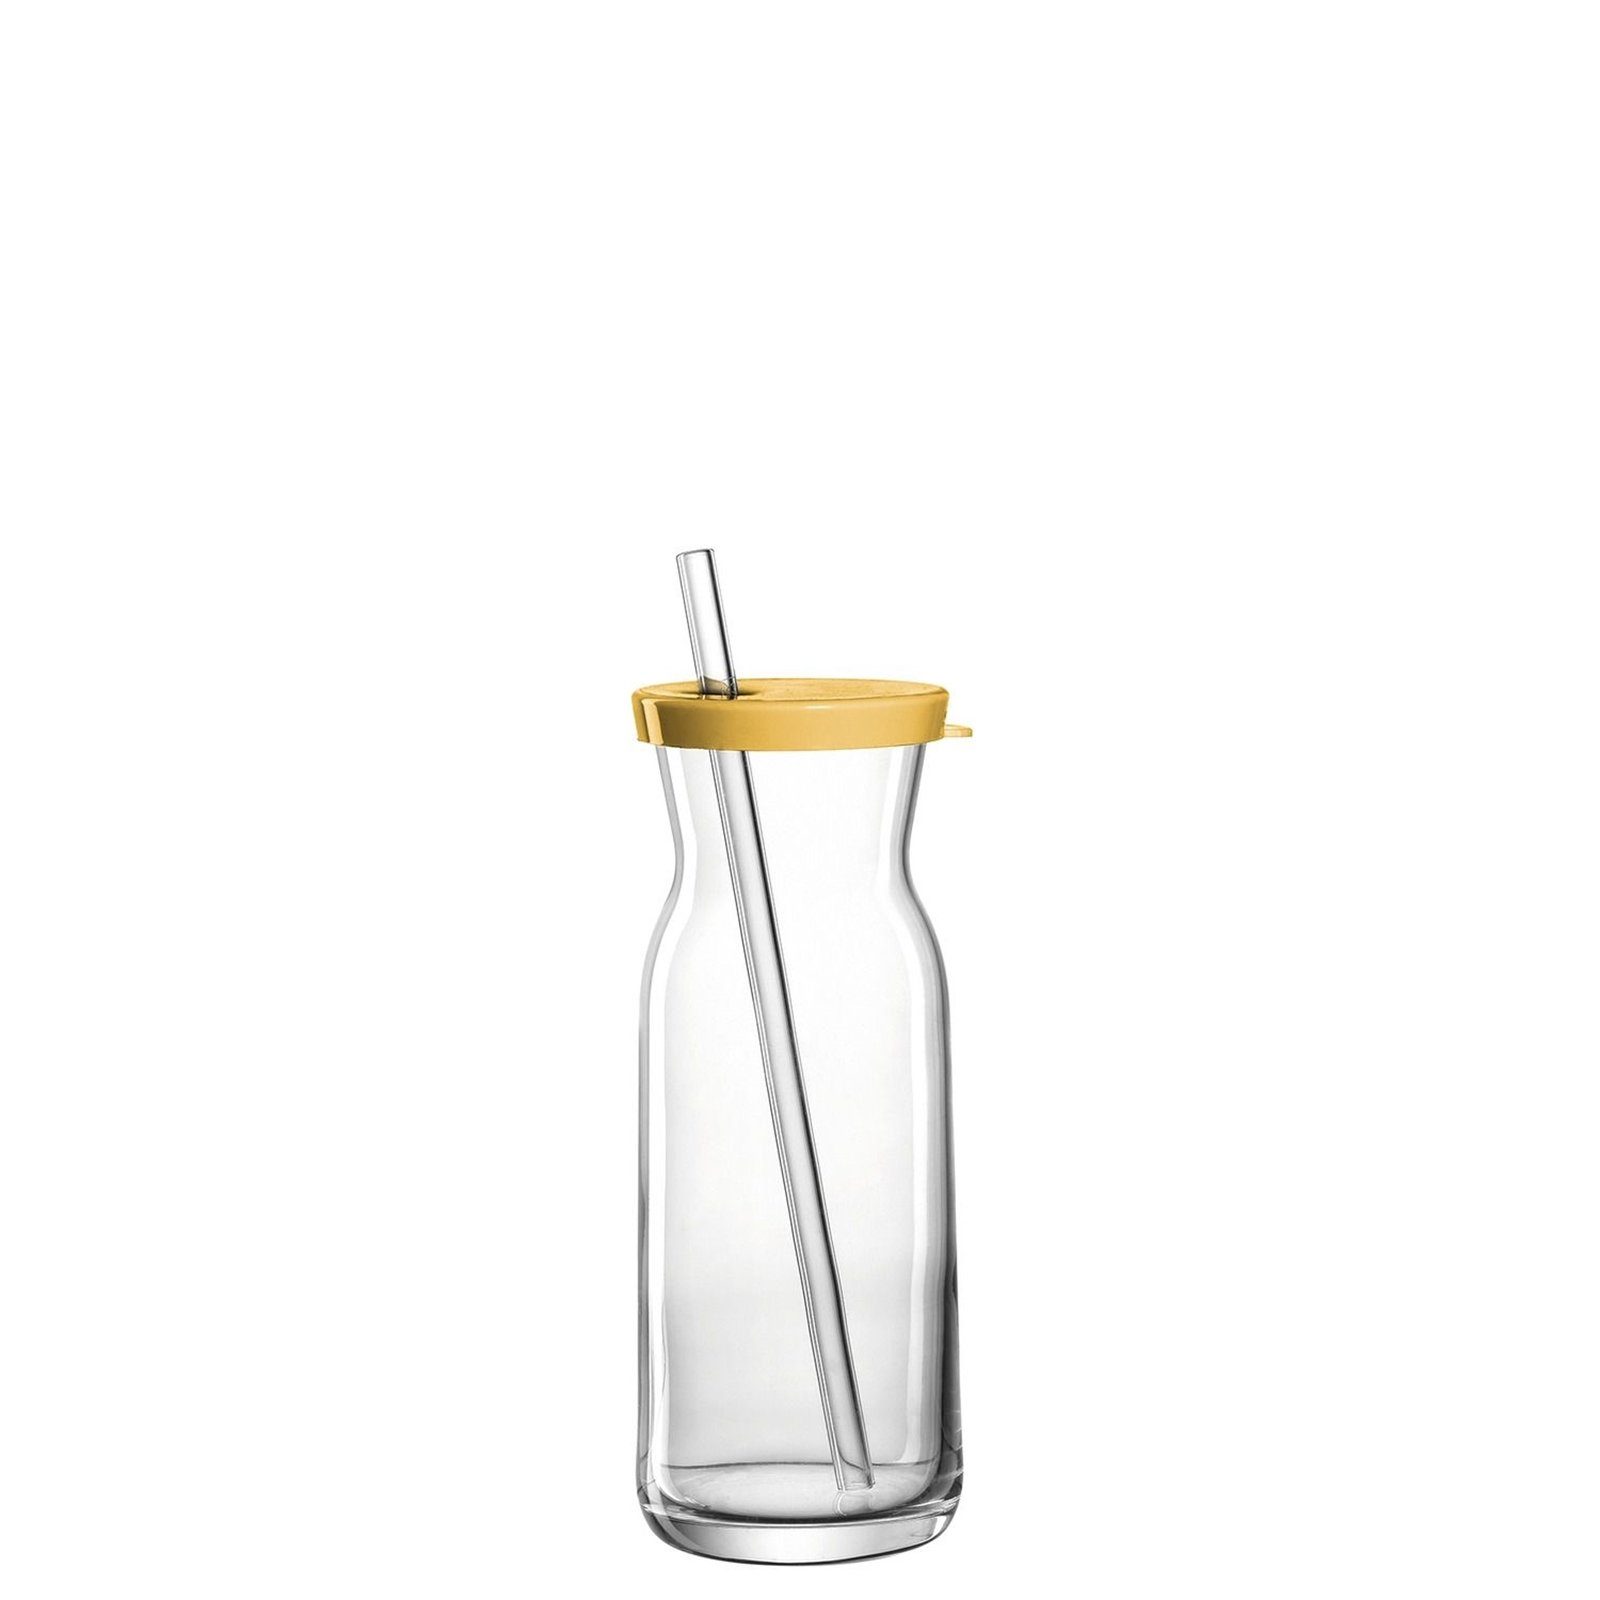 LEONARDO Karaffe »Trinkkaraffe 250 ml gelb mit Glastrinkhalm«, (2-tlg)  online kaufen | OTTO